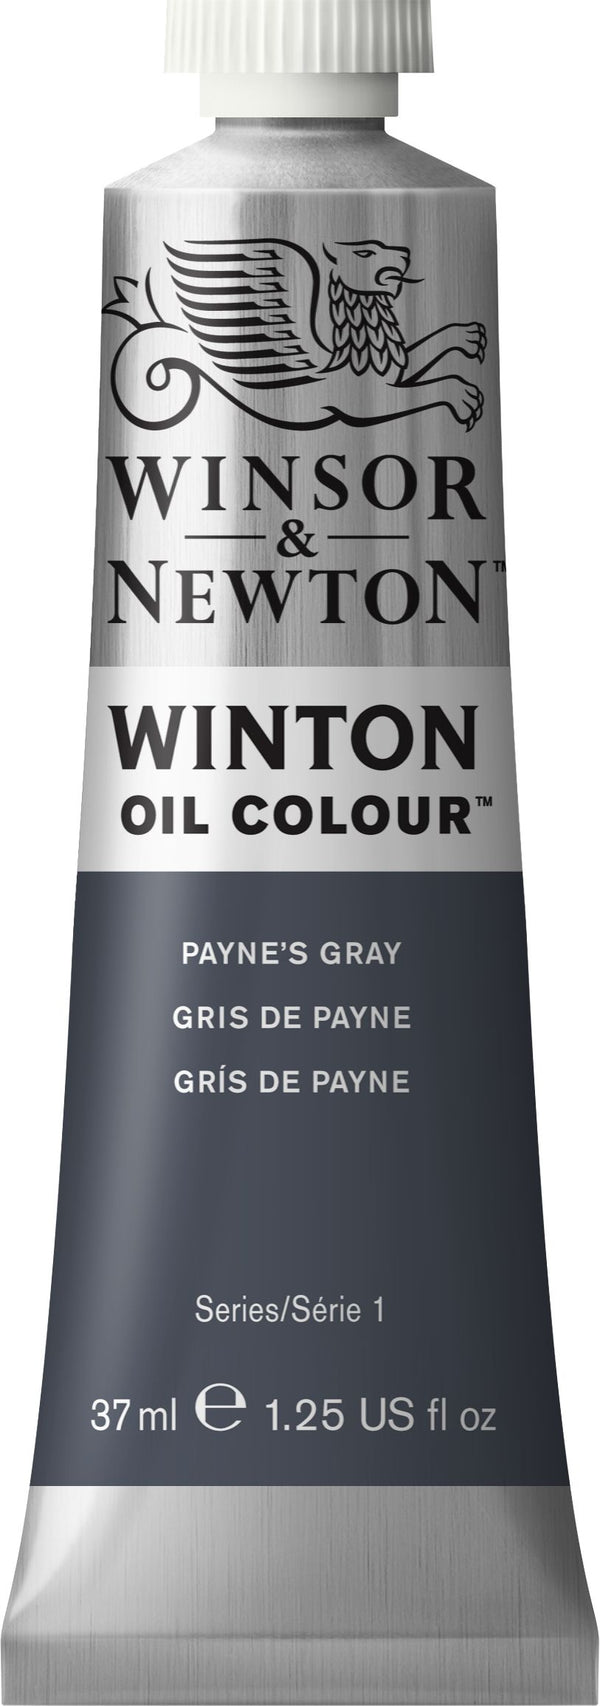 Winton Oil Colour Paynes (Payne’s) Grey - 37ml tube